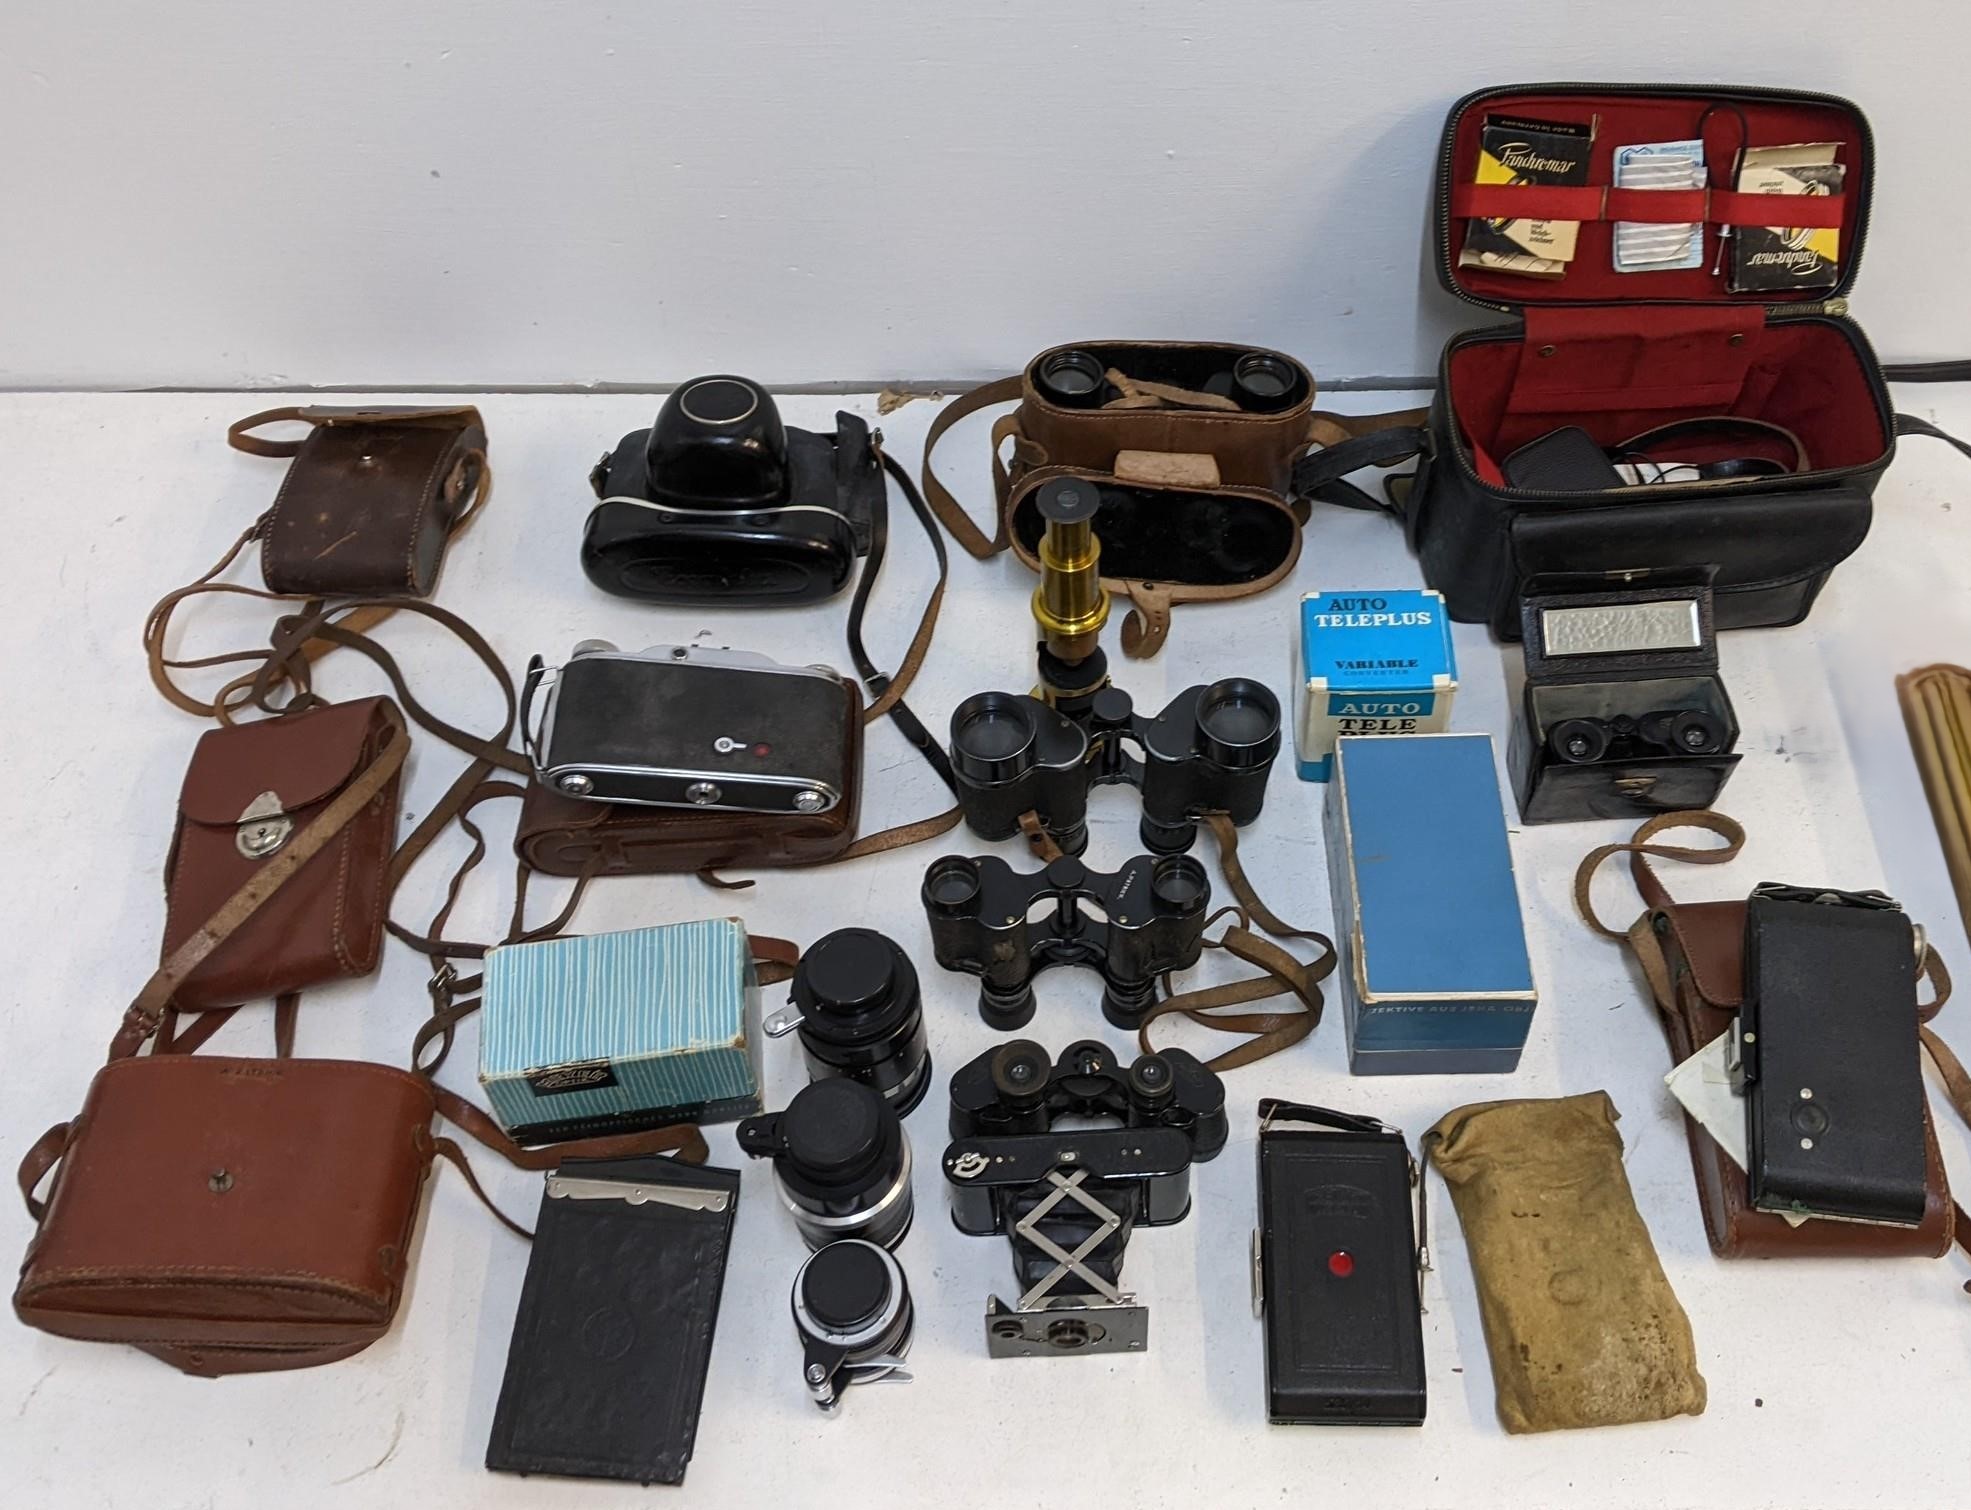 Binoculars and photographic related equipment to include an Eastman Kodak camera, Grodenstock